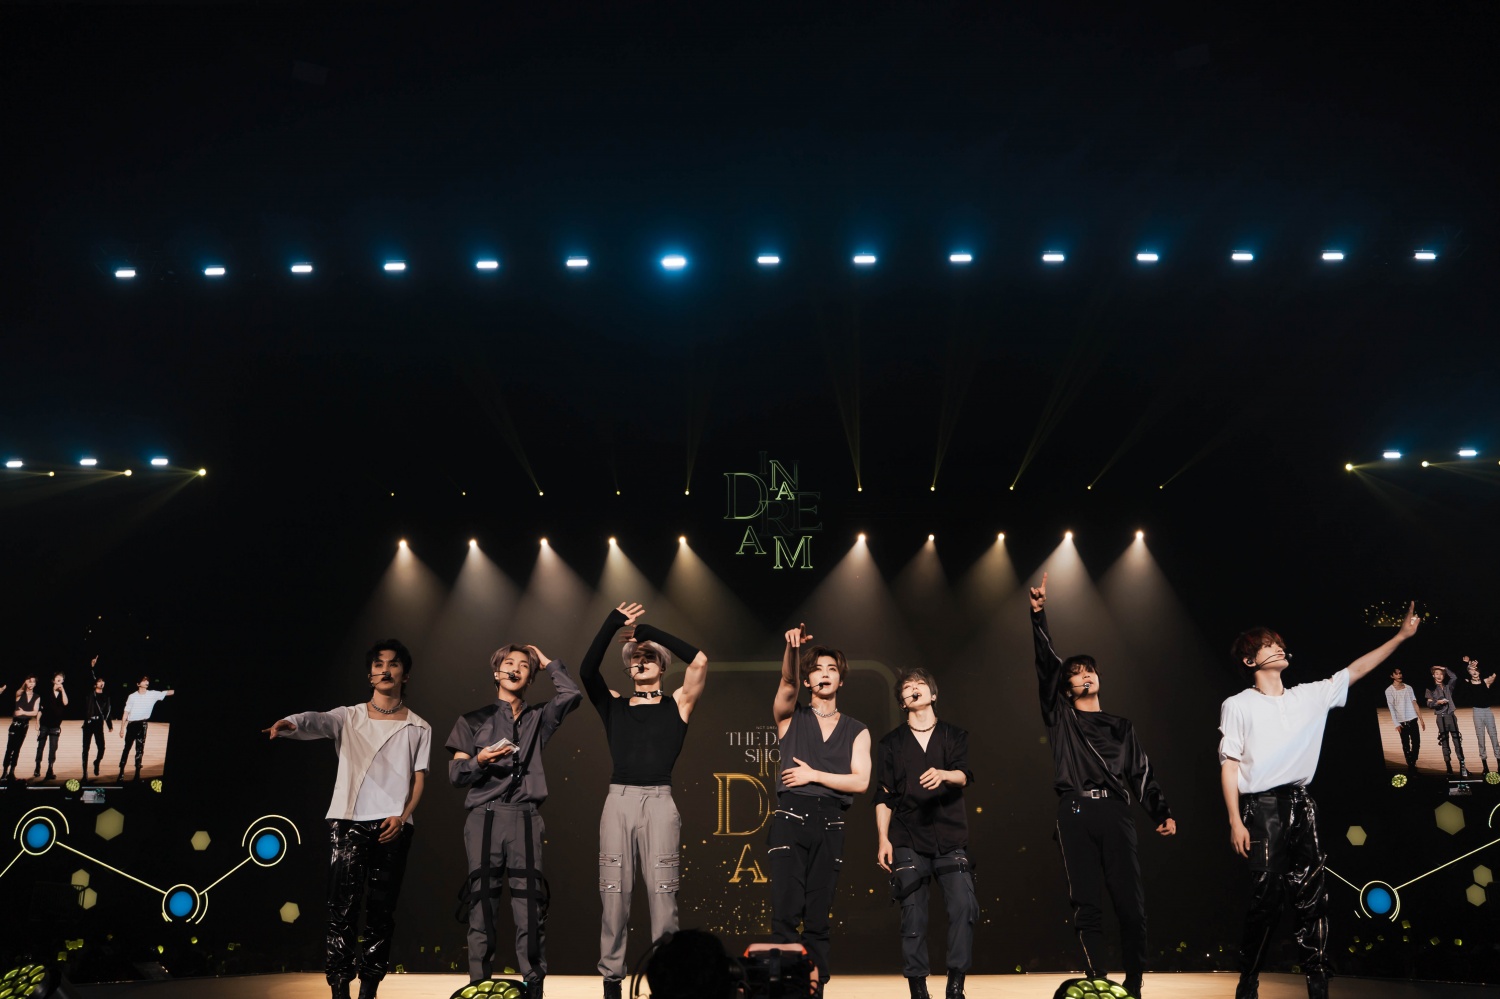 NCT DREAM TOUR ‘THE DREAM SHOW2 : In A DREAM’ in KUALA LUMPUR 